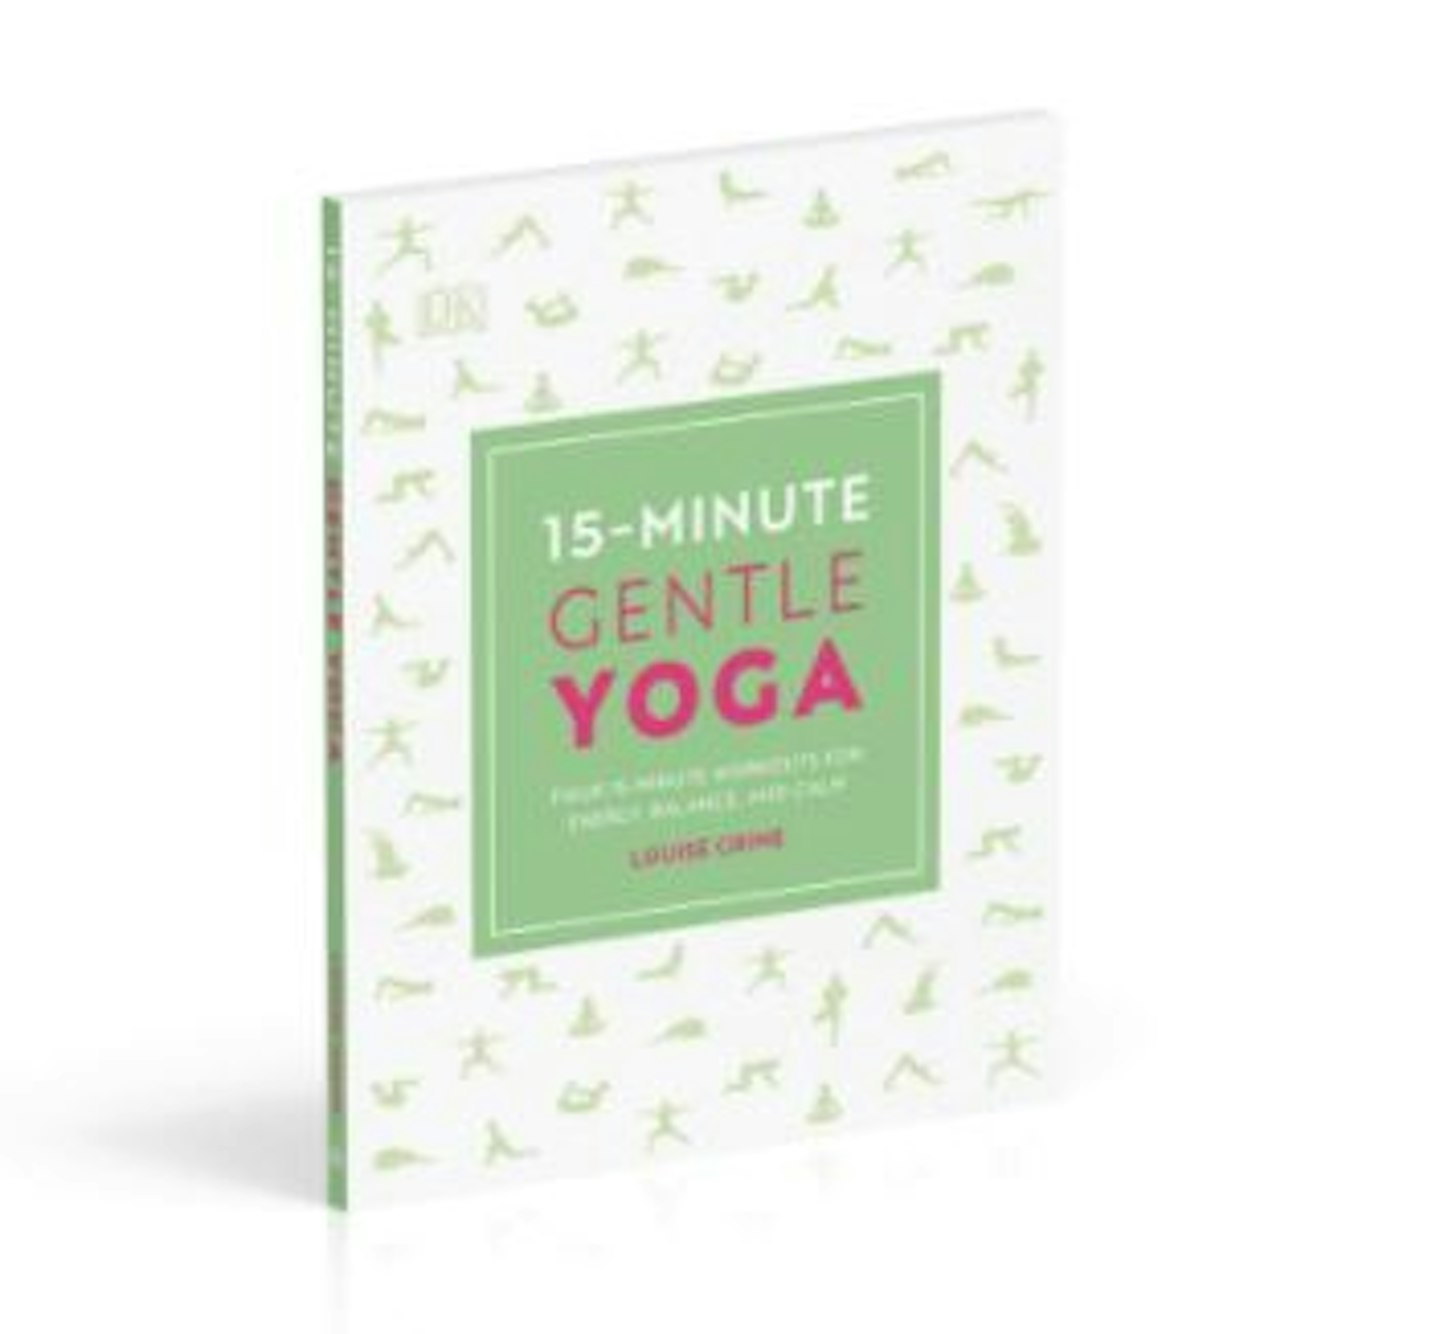 15-Minute Gentle Yoga u2013 Louise Grimes